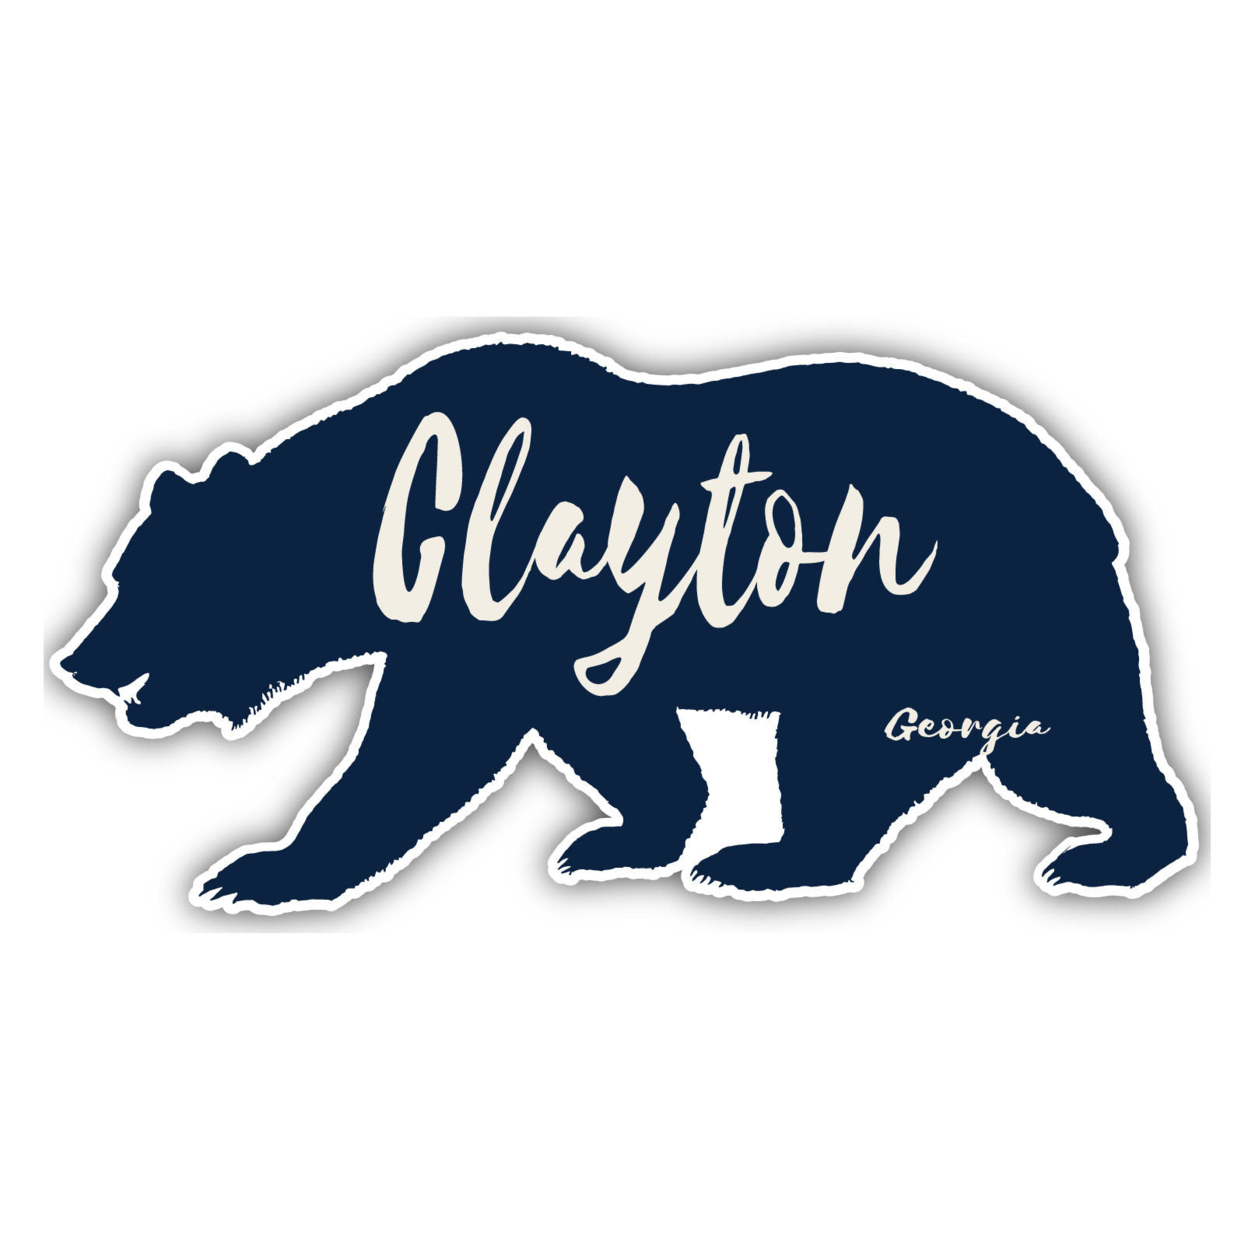 Clayton Georgia Souvenir Decorative Stickers (Choose Theme And Size) - Single Unit, 12-Inch, Bear